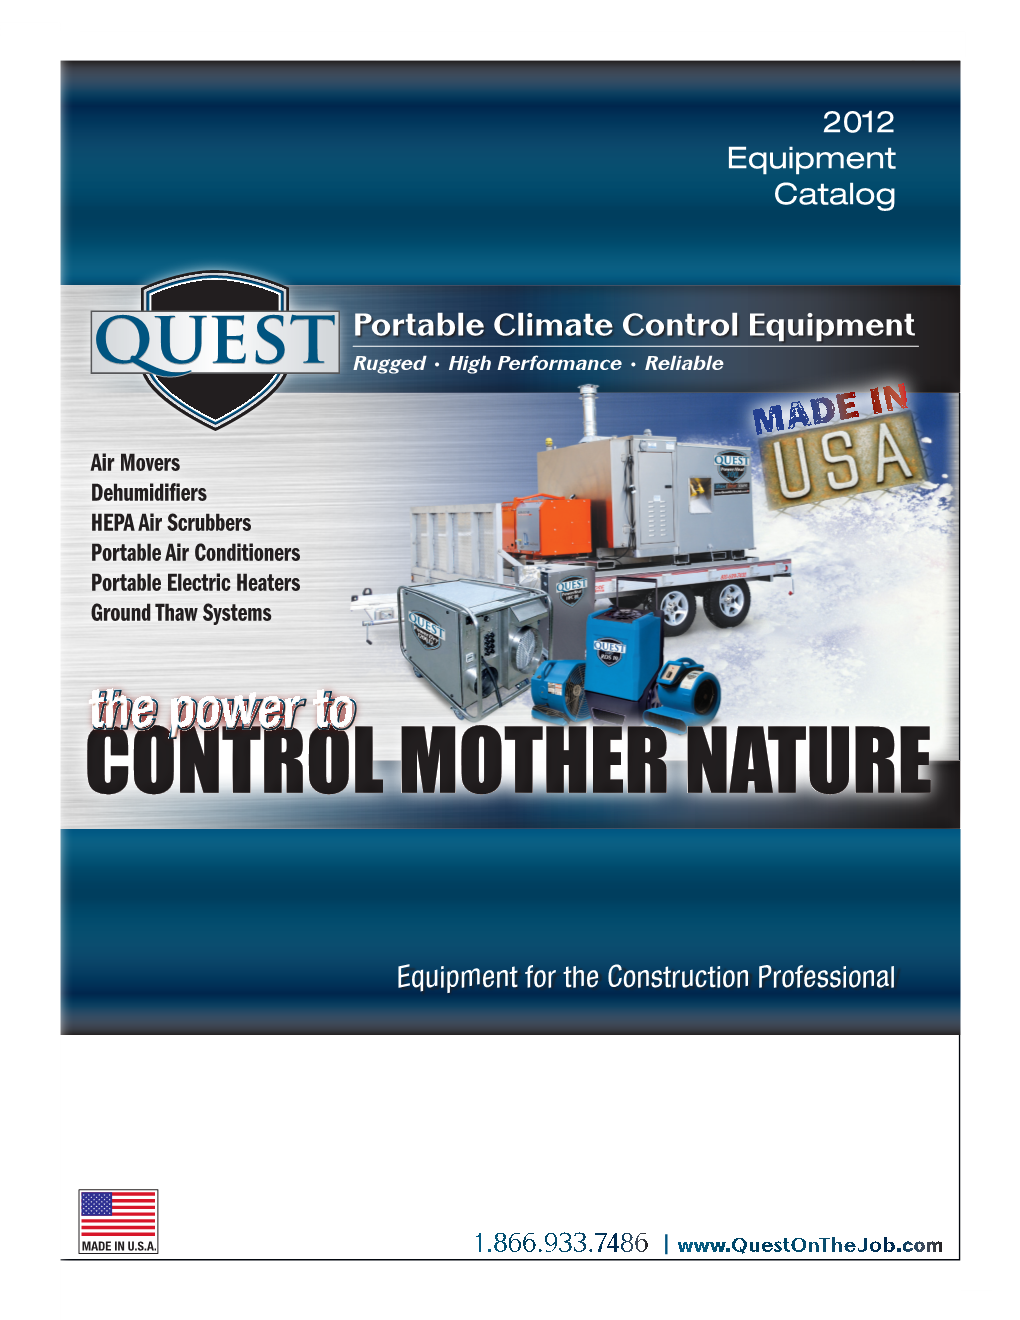 Quest Equipment Catalog